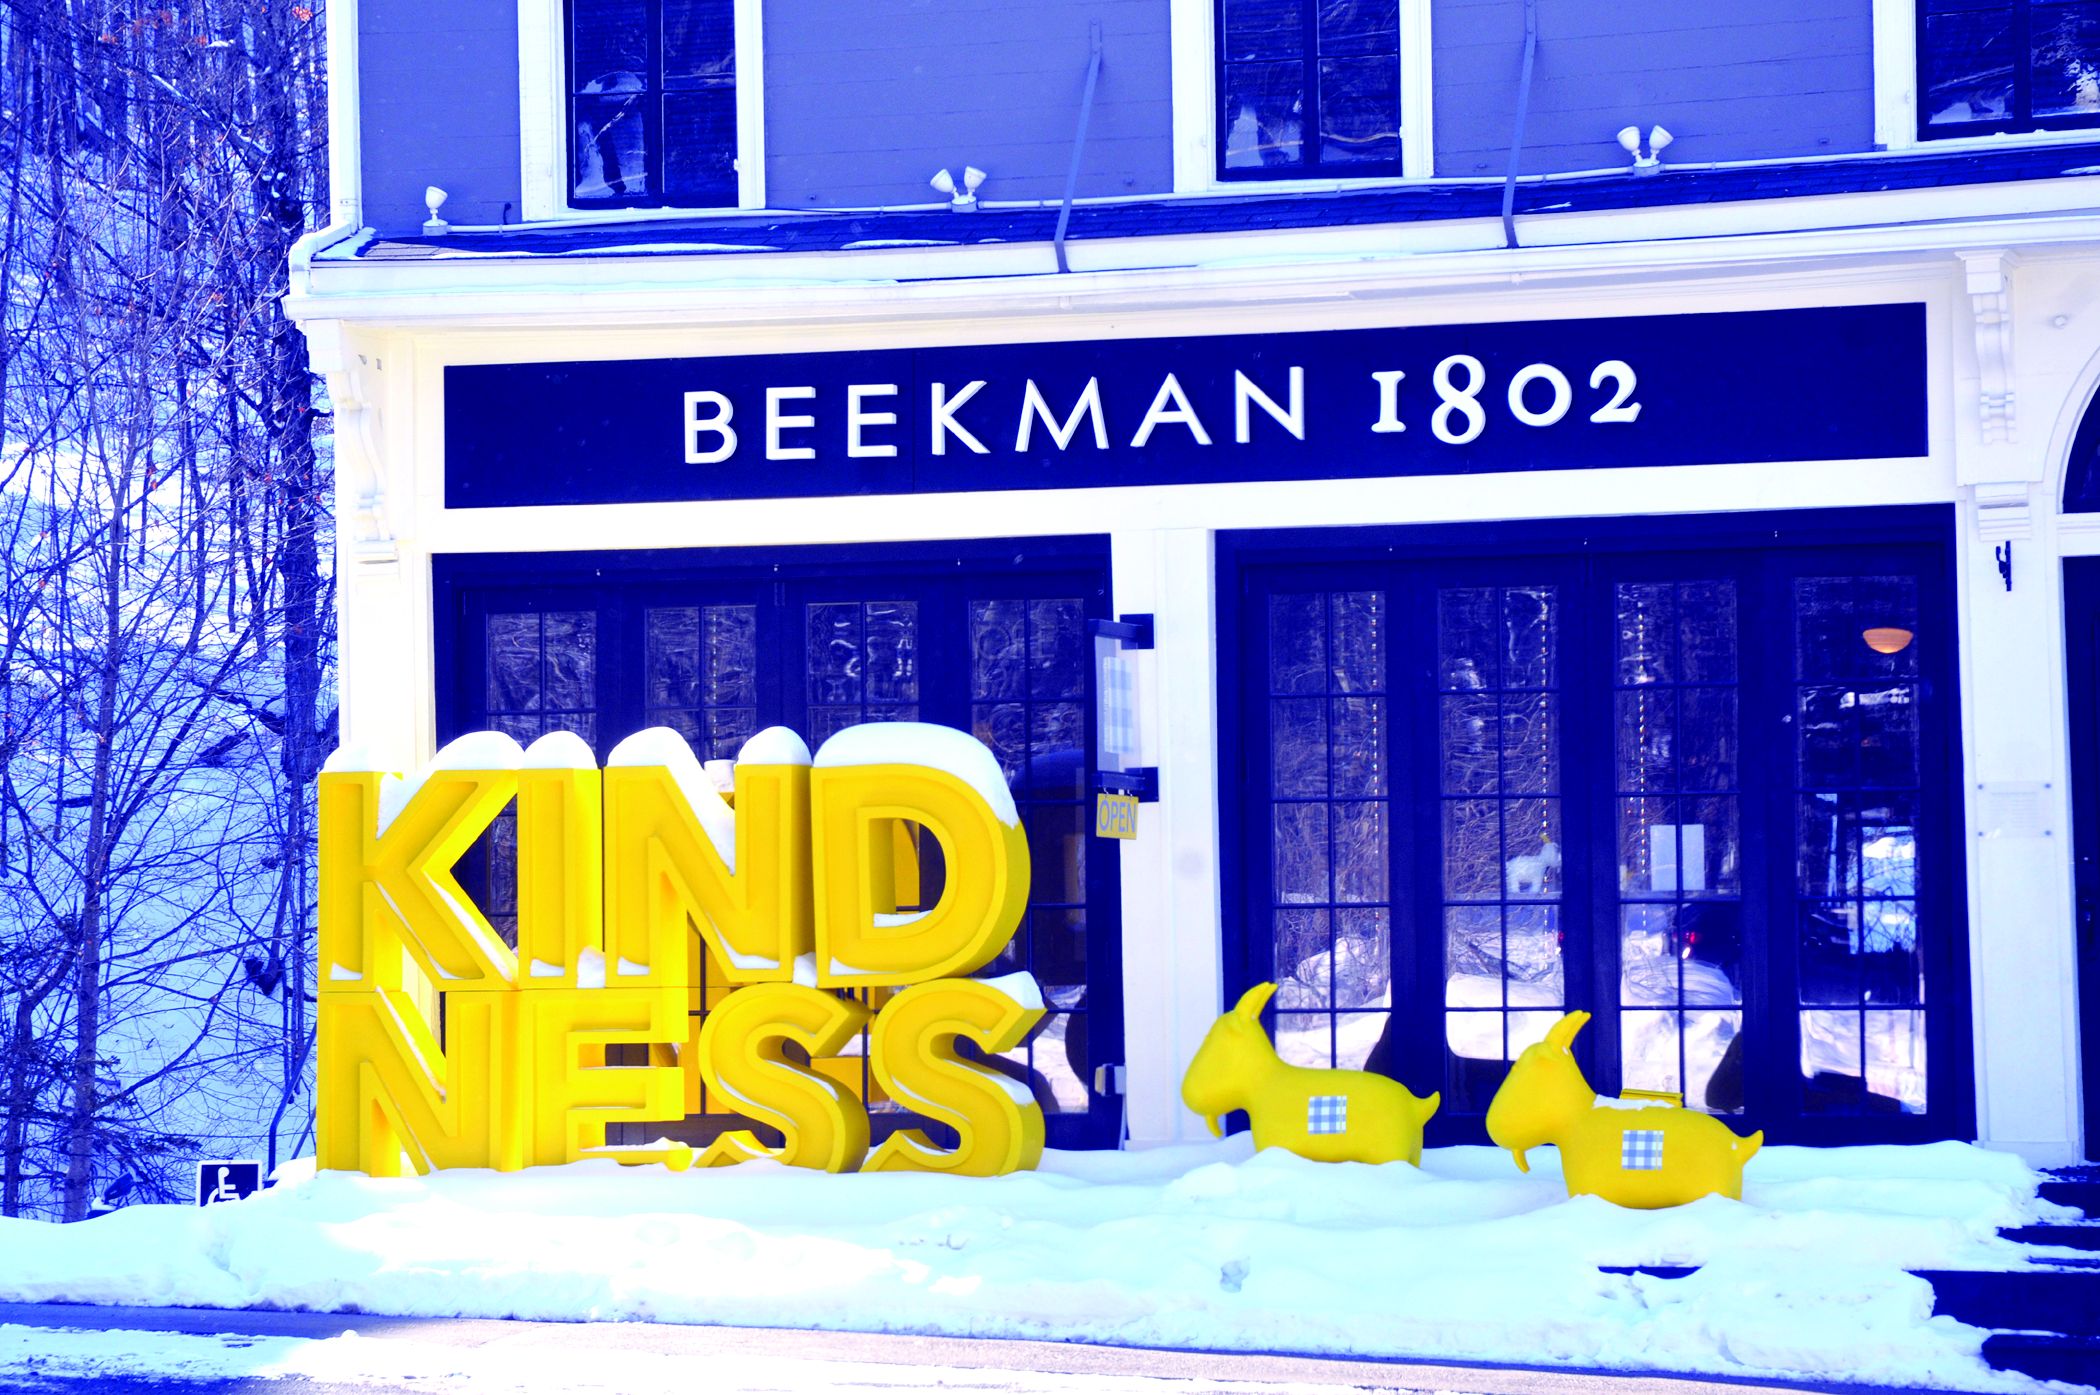 Beekman 1802 spreads kindness to schools